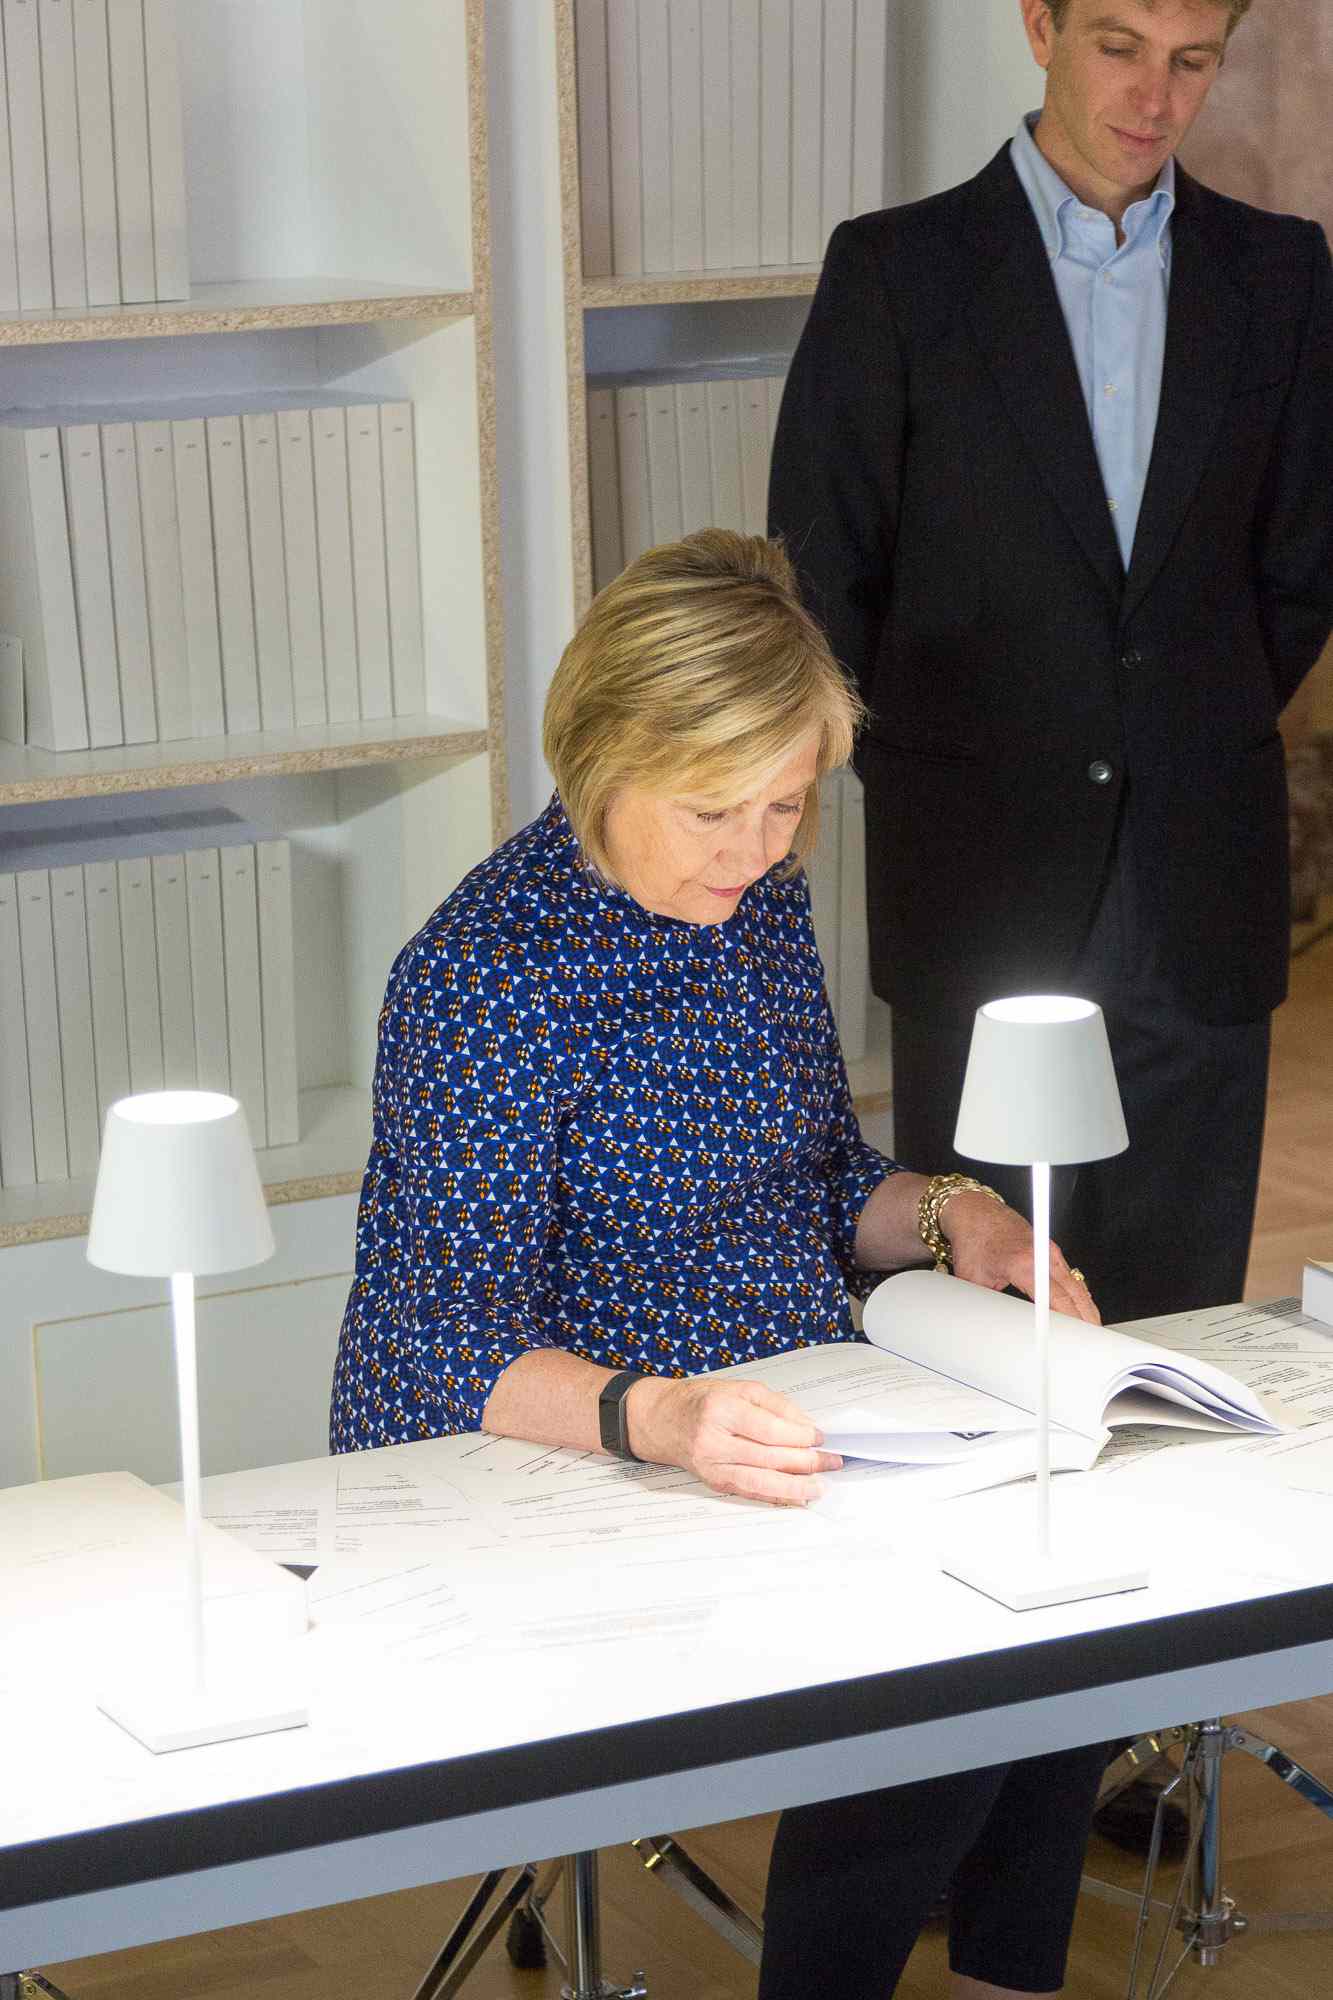 Hilary Clinton at the Venice Biennale